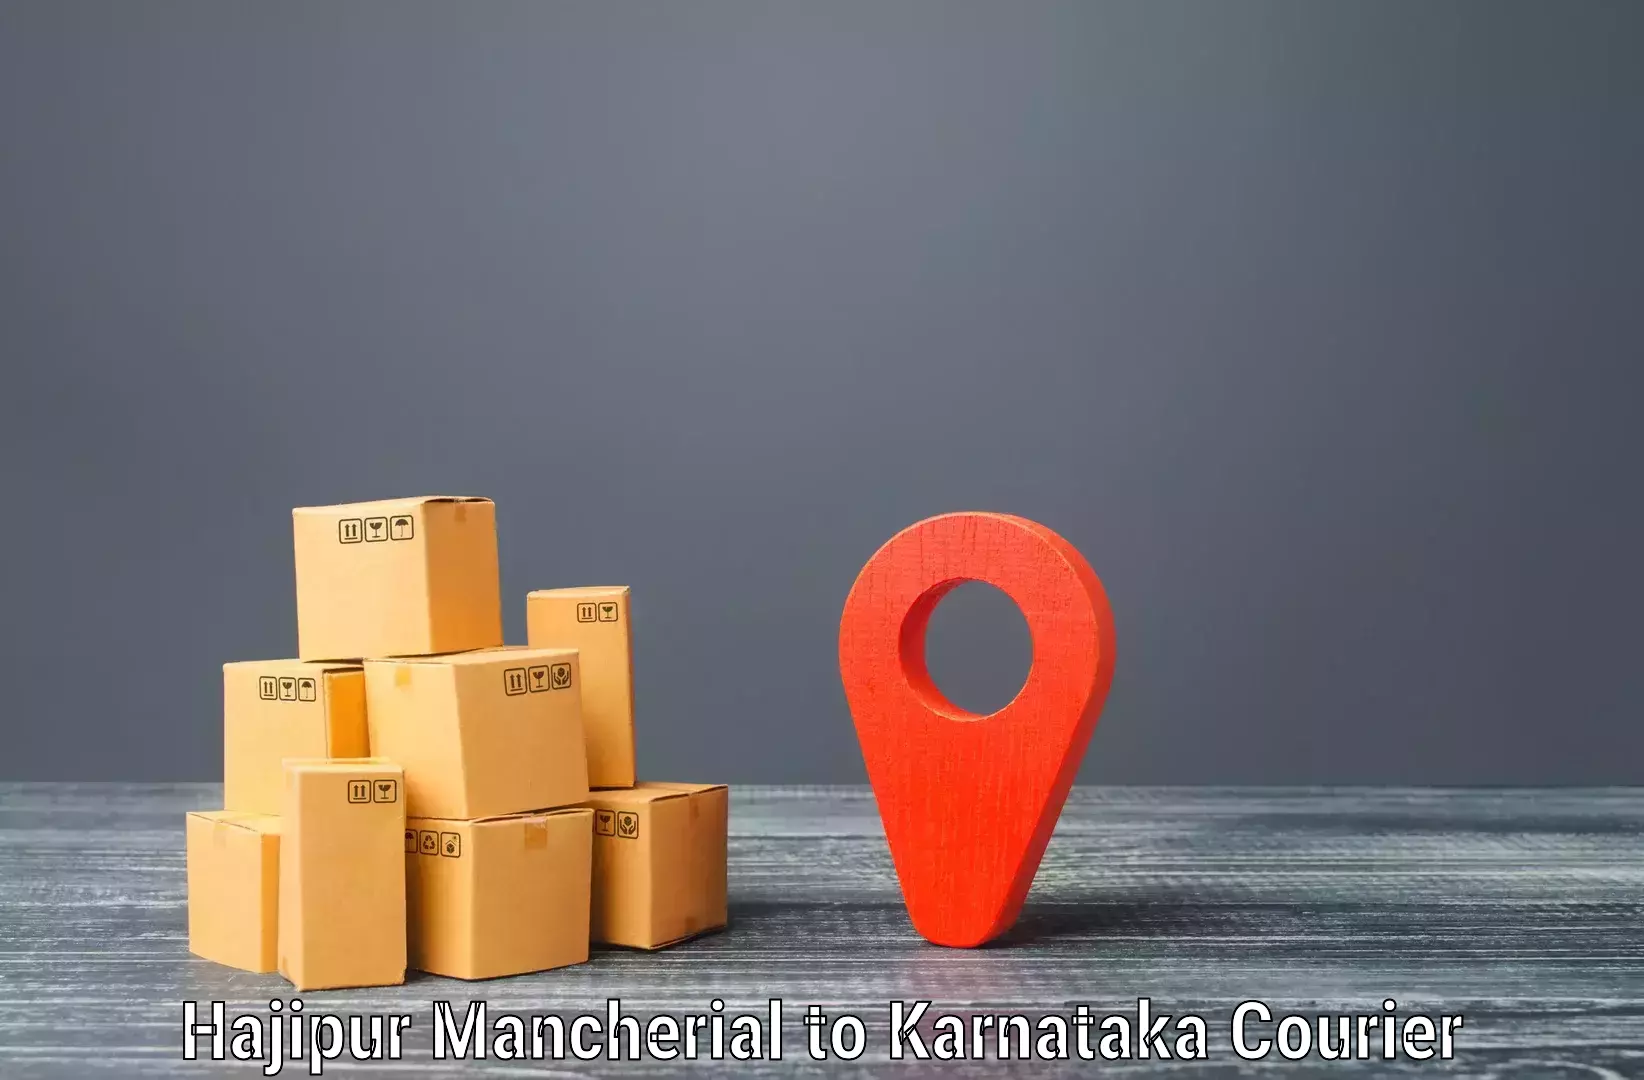 Reliable logistics providers Hajipur Mancherial to Holalu